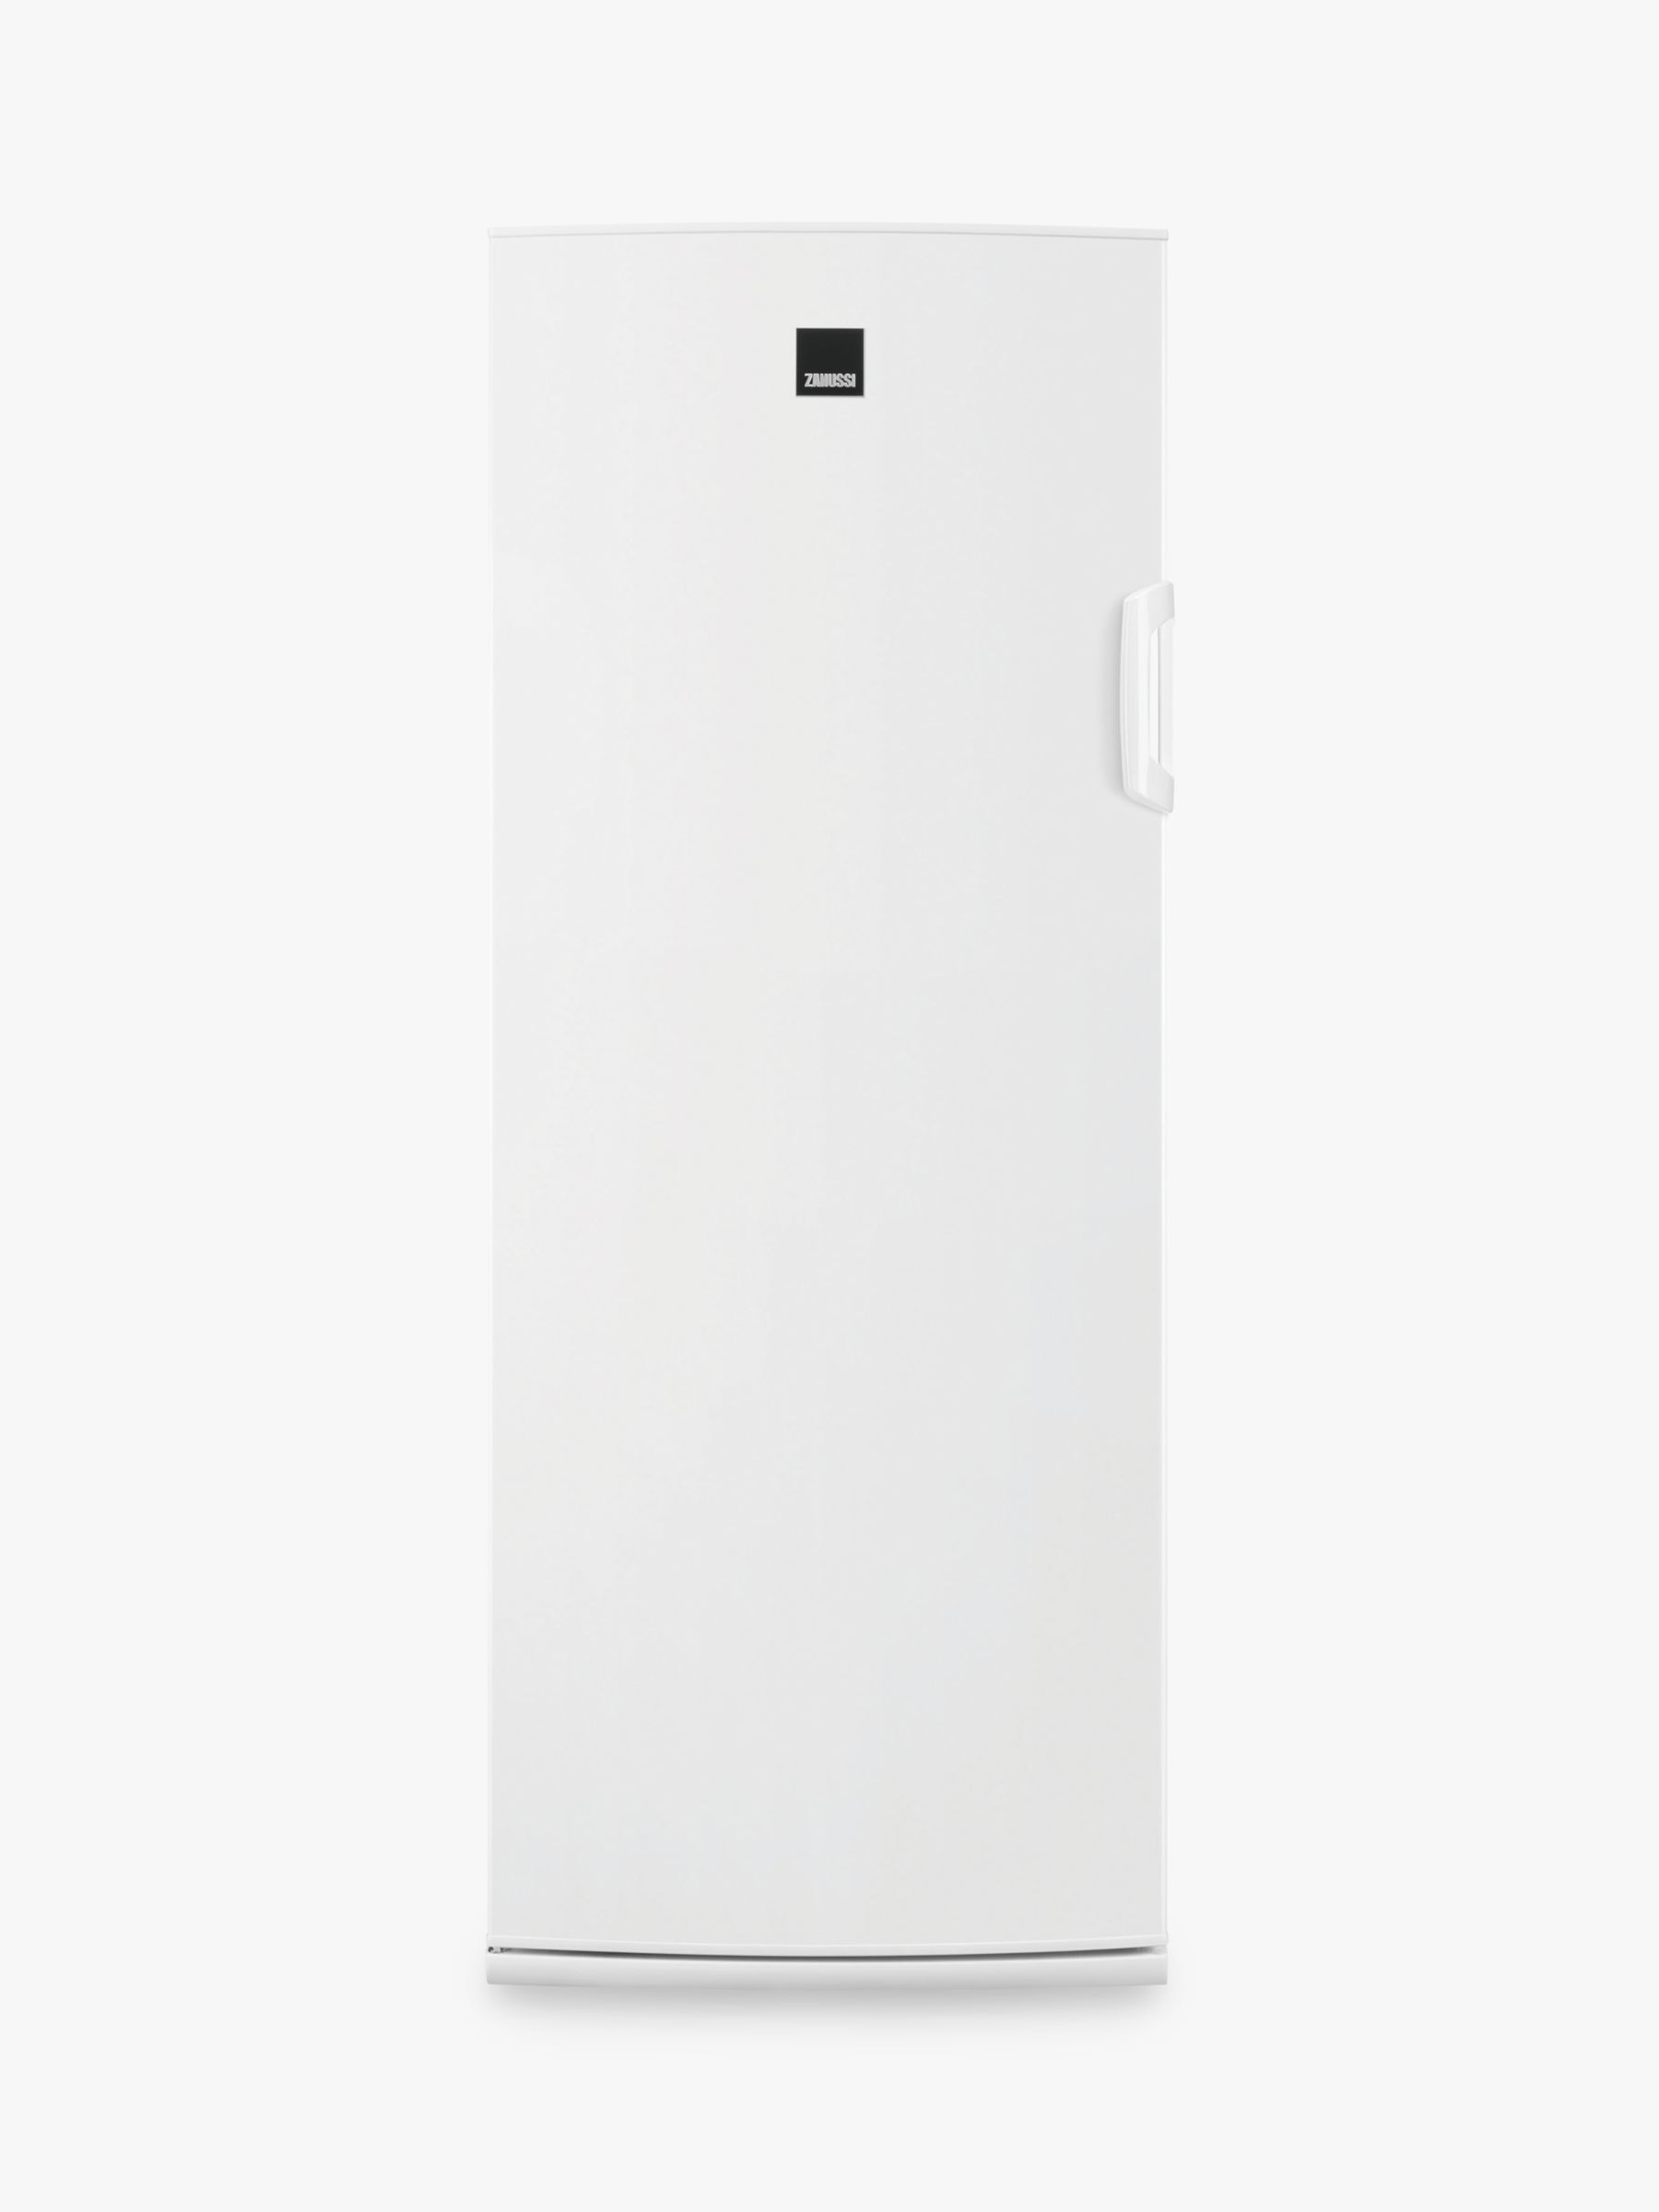 Zanussi ZFU20223WV Freestanding Freezer, A+ Energy Rating, 60cm Wide, White